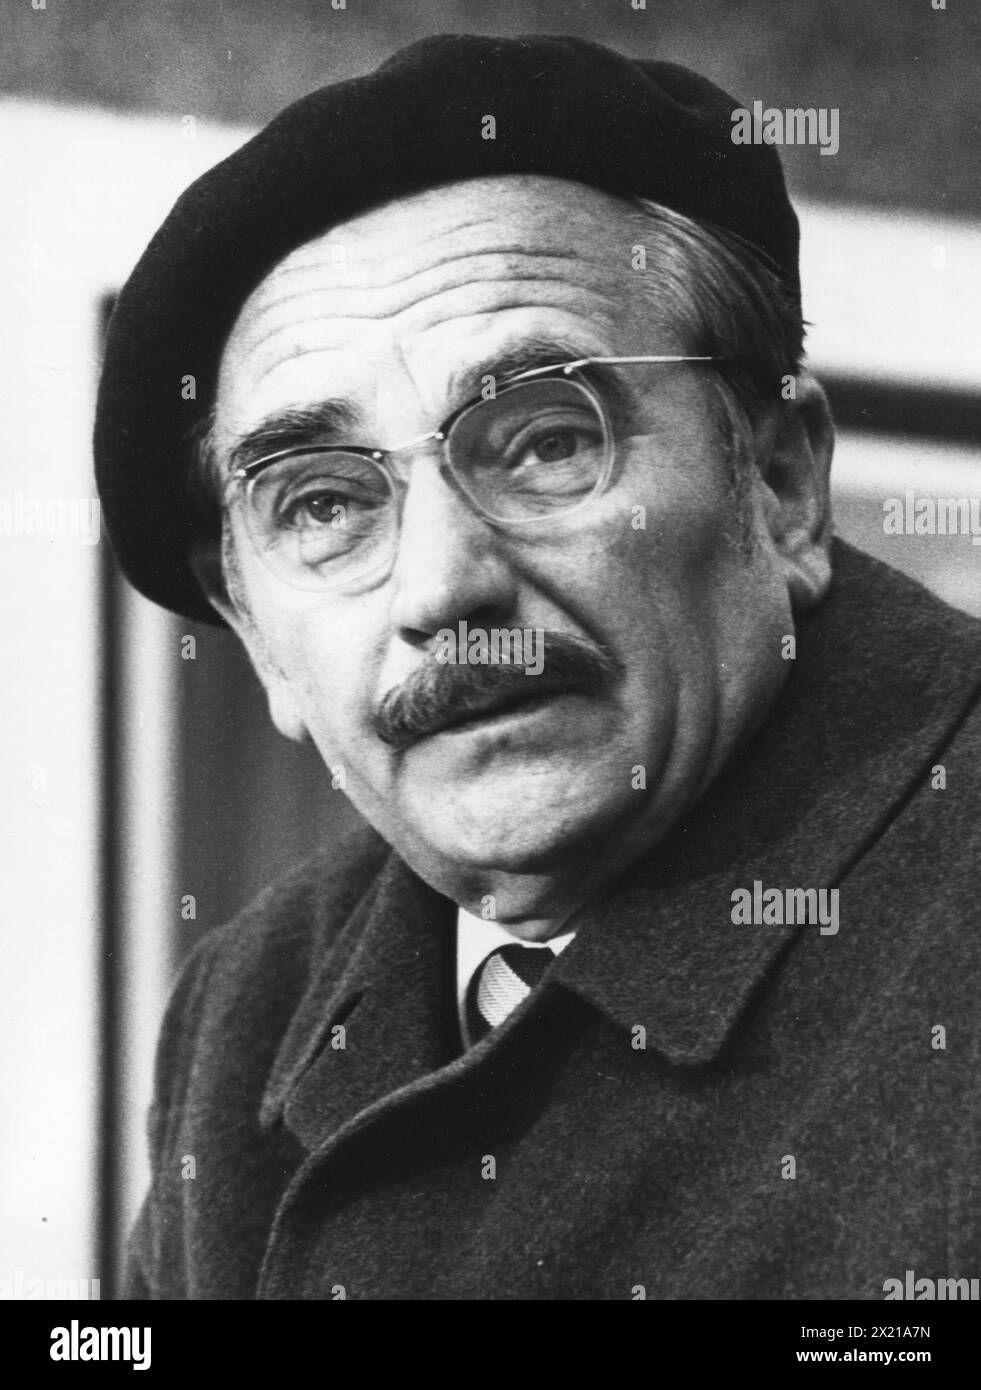 Walter, Ruedi, 10.12.1916 - 16.6,1990, Schweizer Schauspieler, geb.: Hans Rudolf Haefeli, ADDITIONAL-RIGHTS-CLEARANCE-INFO-NOT-AVAILABLE Stockfoto